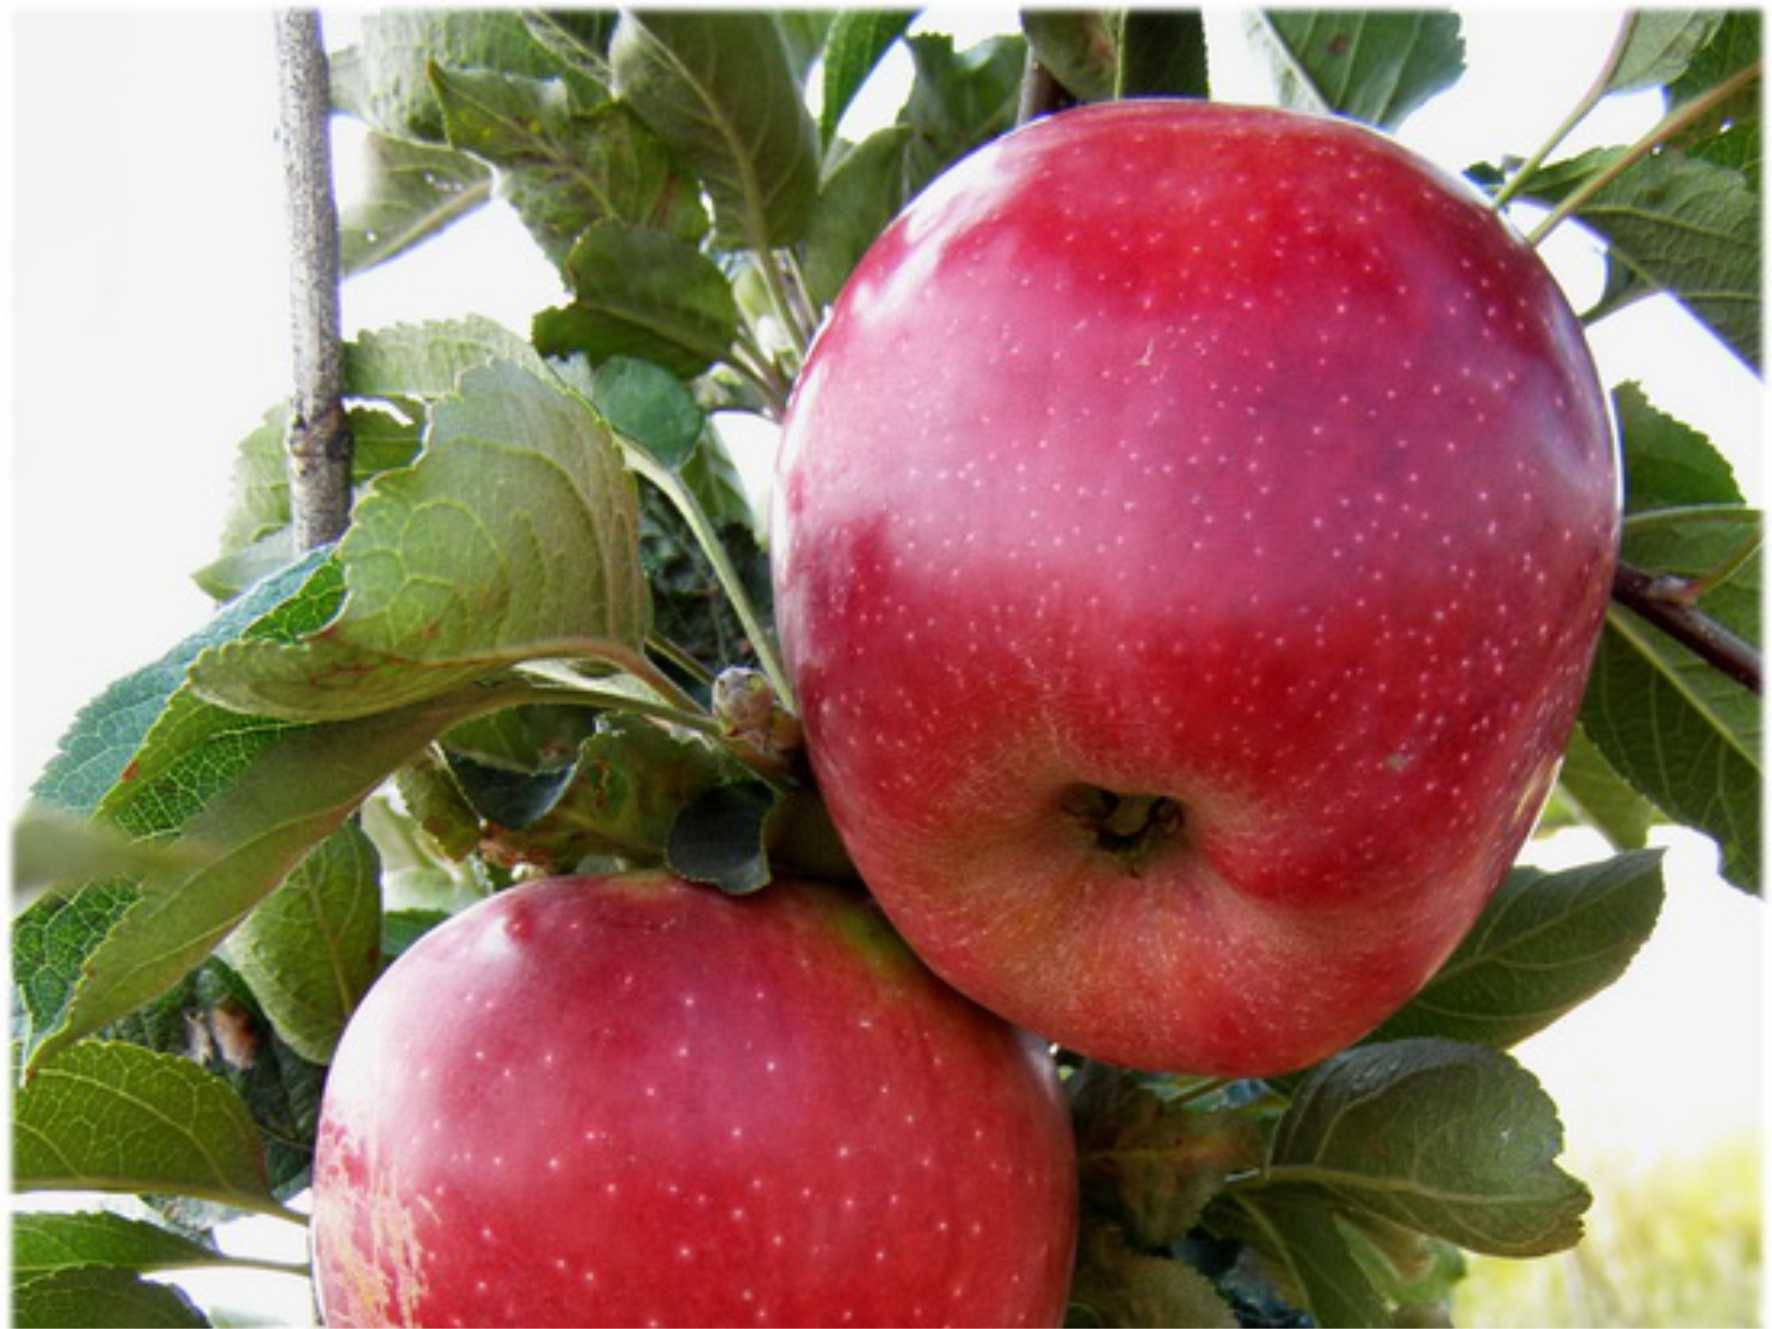 Ред делишес: описание сорта яблони и правила агротехники